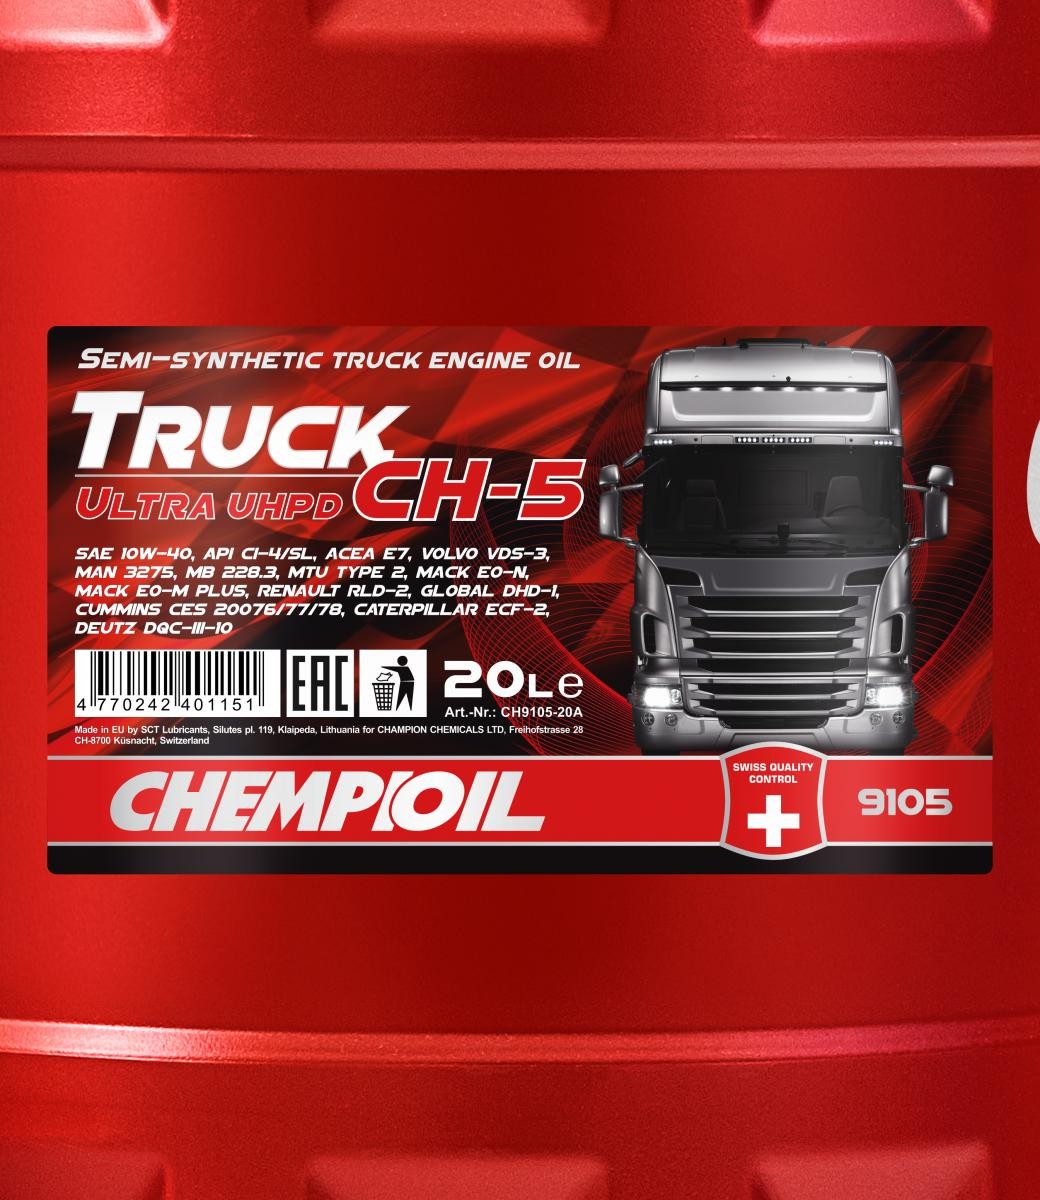 Aceite de Motor Diésel Para Camión Chempioil Truck API CI-4 SHPD 15W40